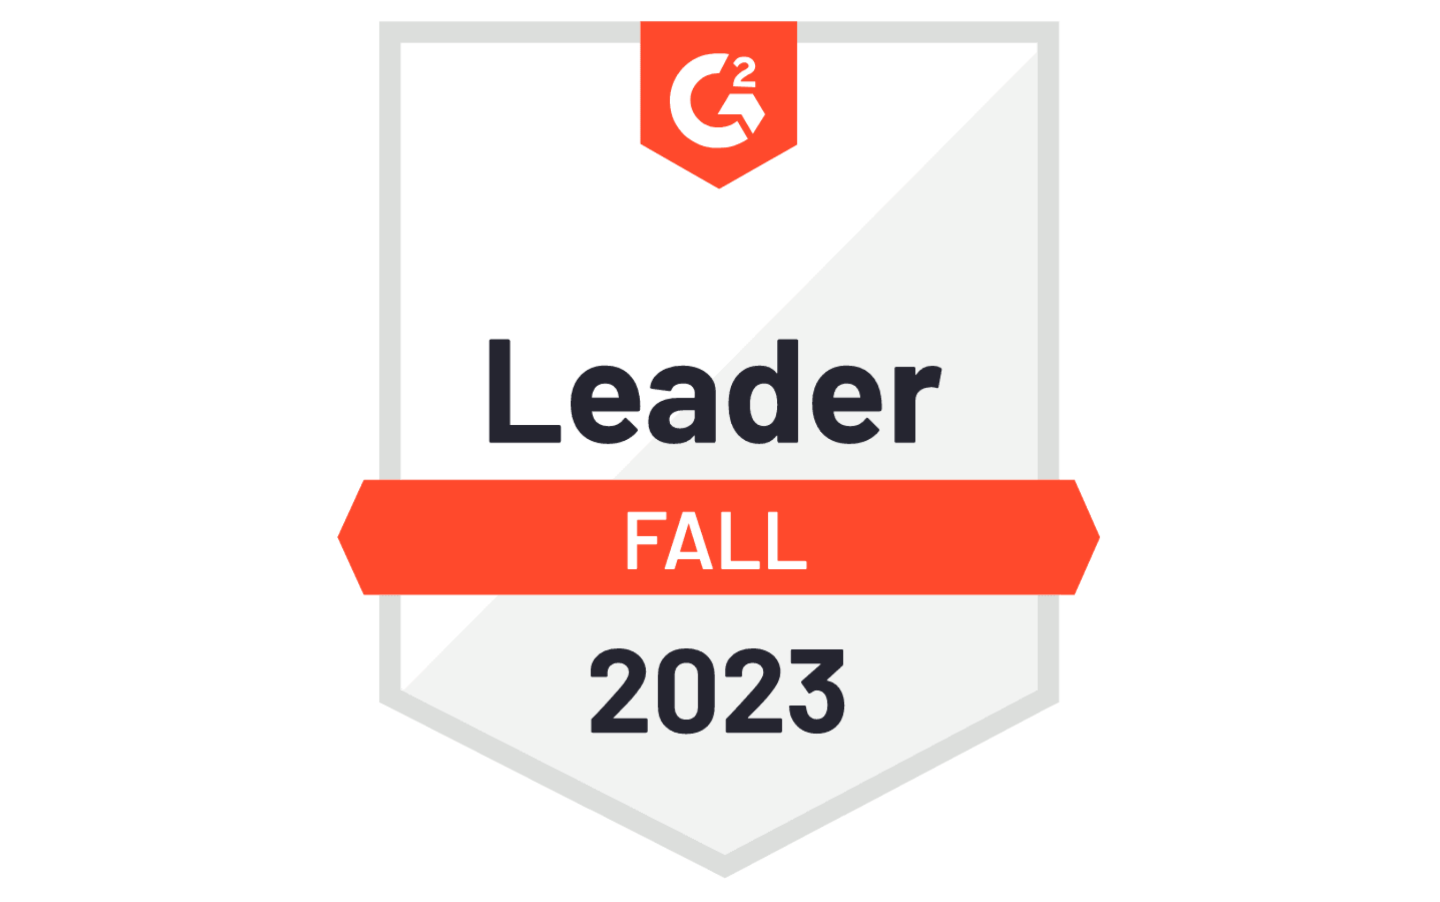 g2-leader-fall23-badge